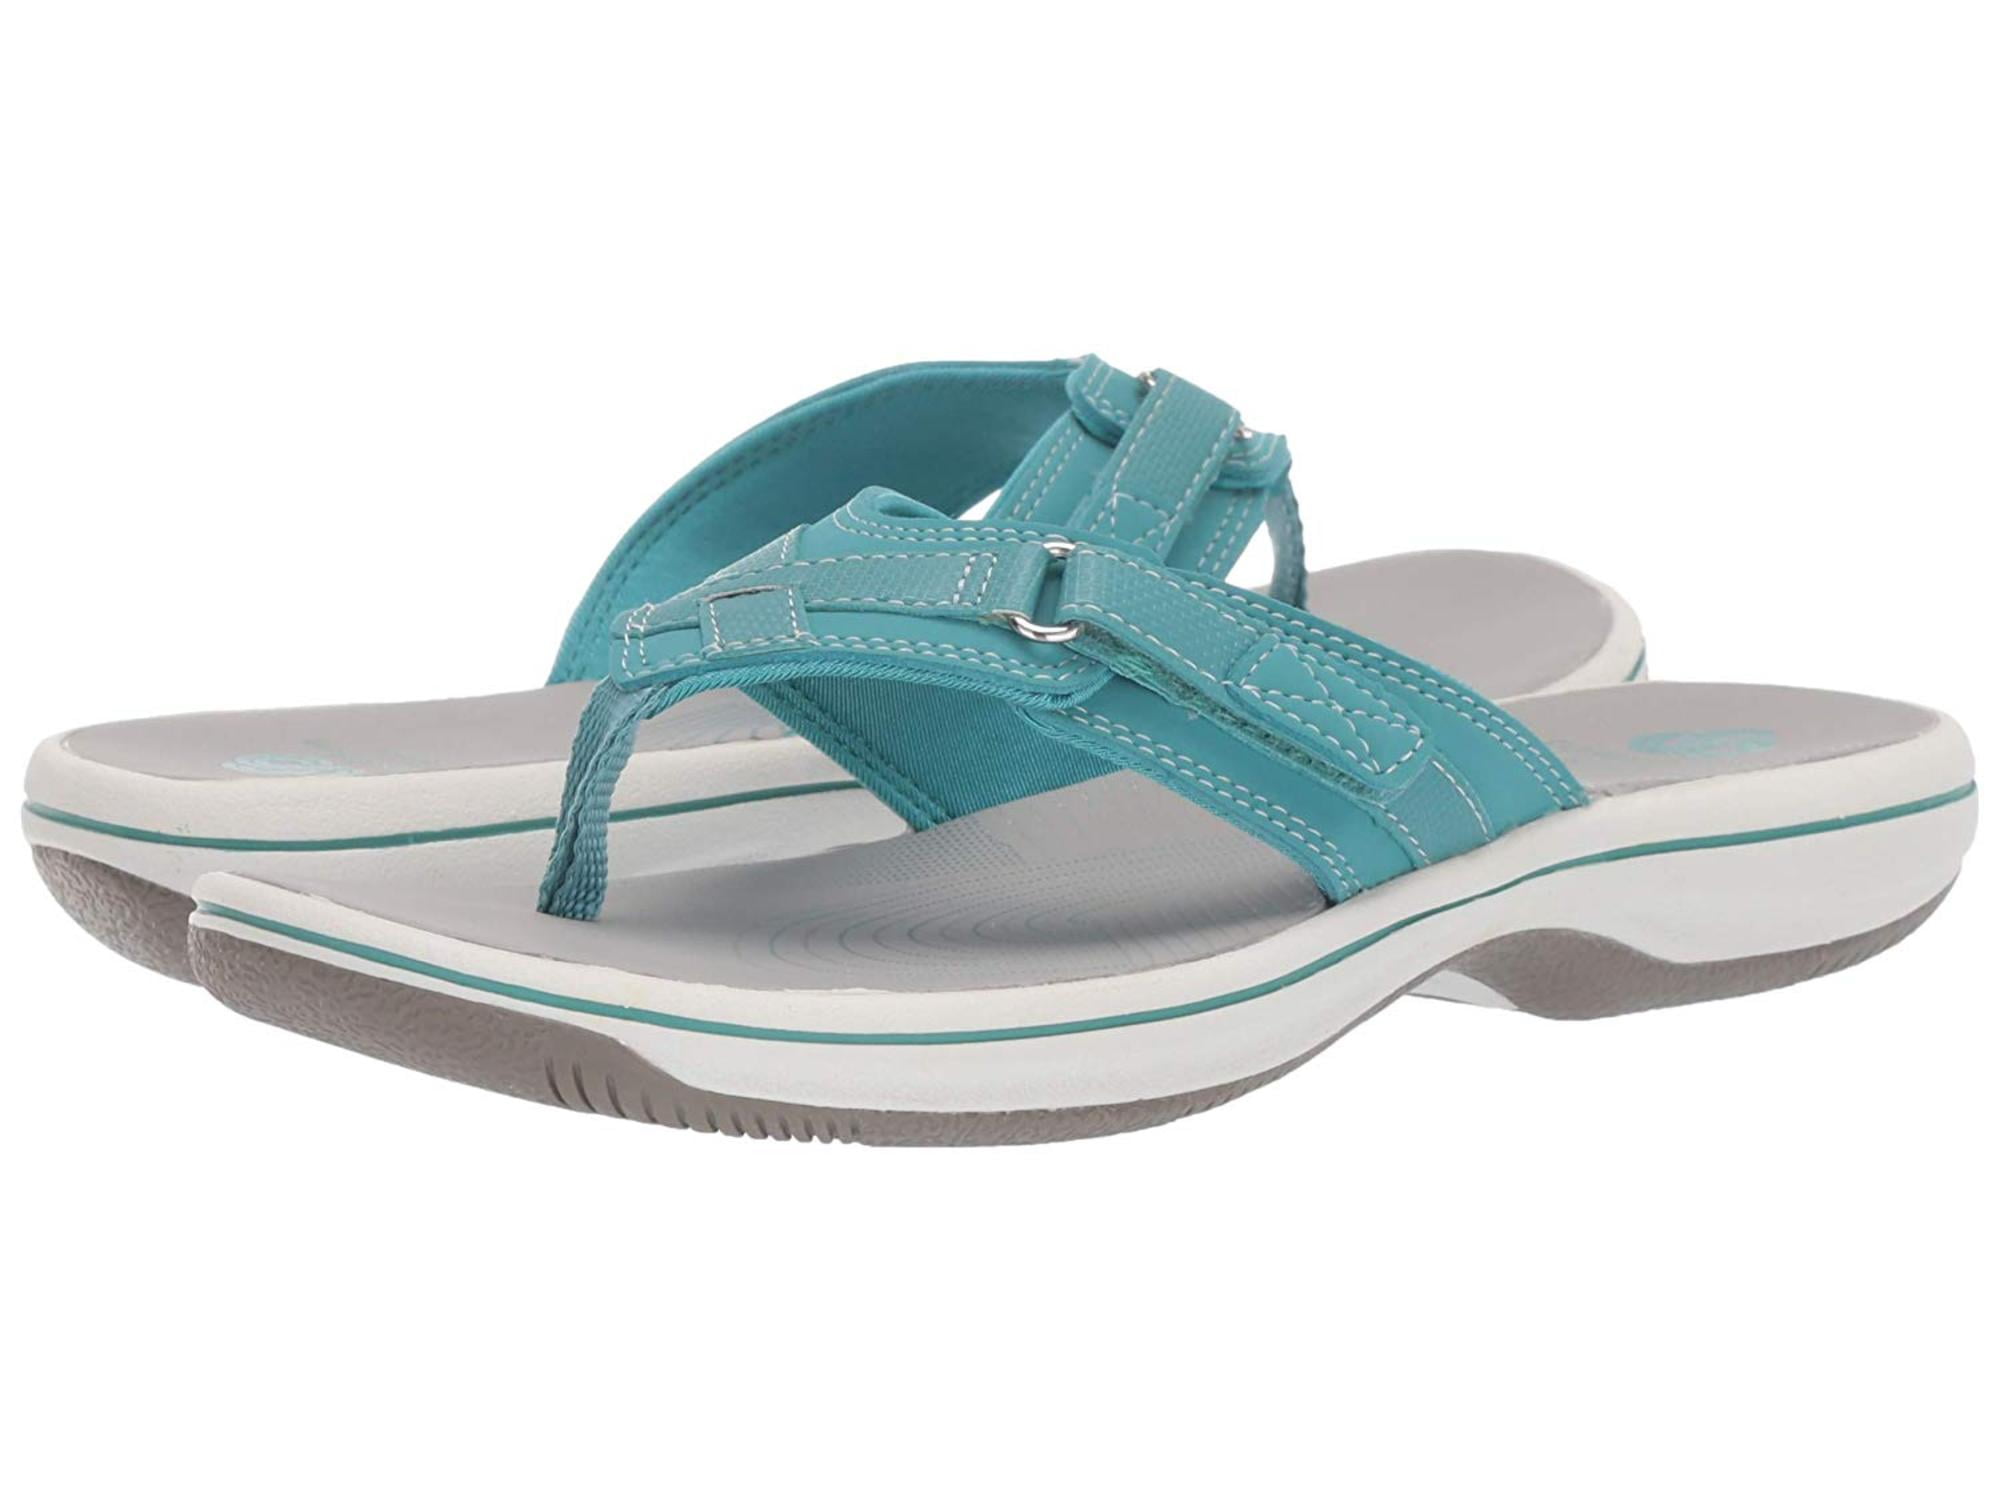 clarks women's shoes breeze sea flip flops